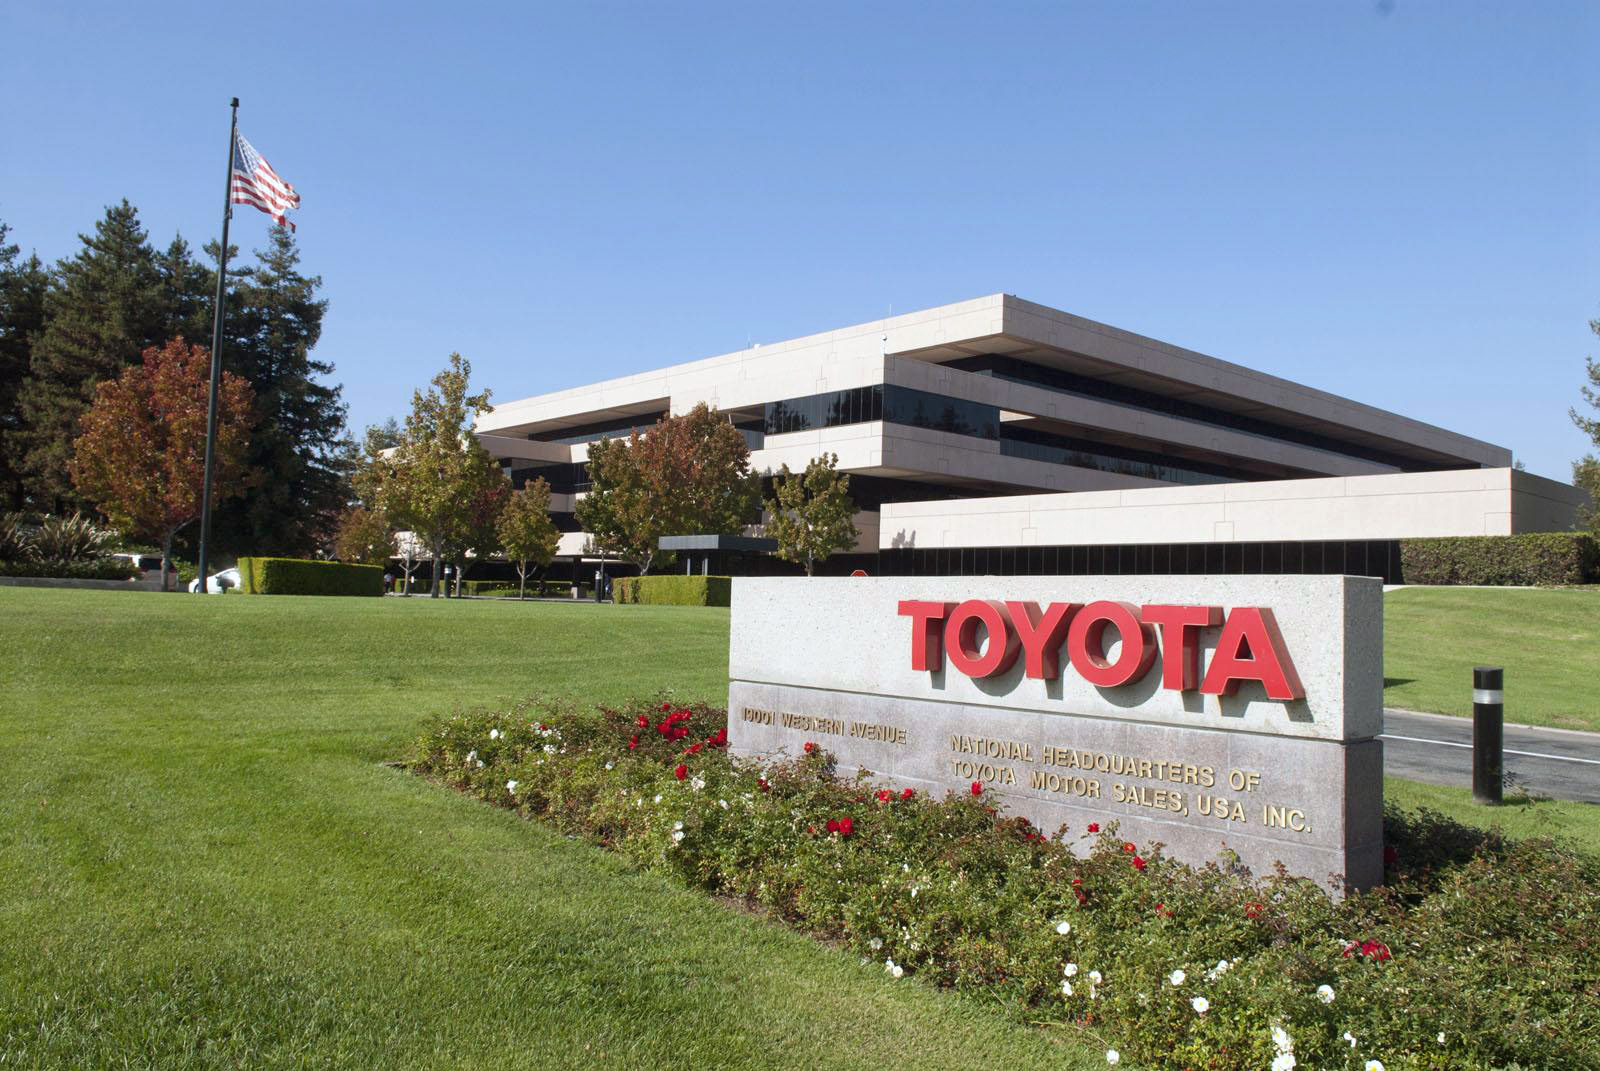 Toyota motor sales california